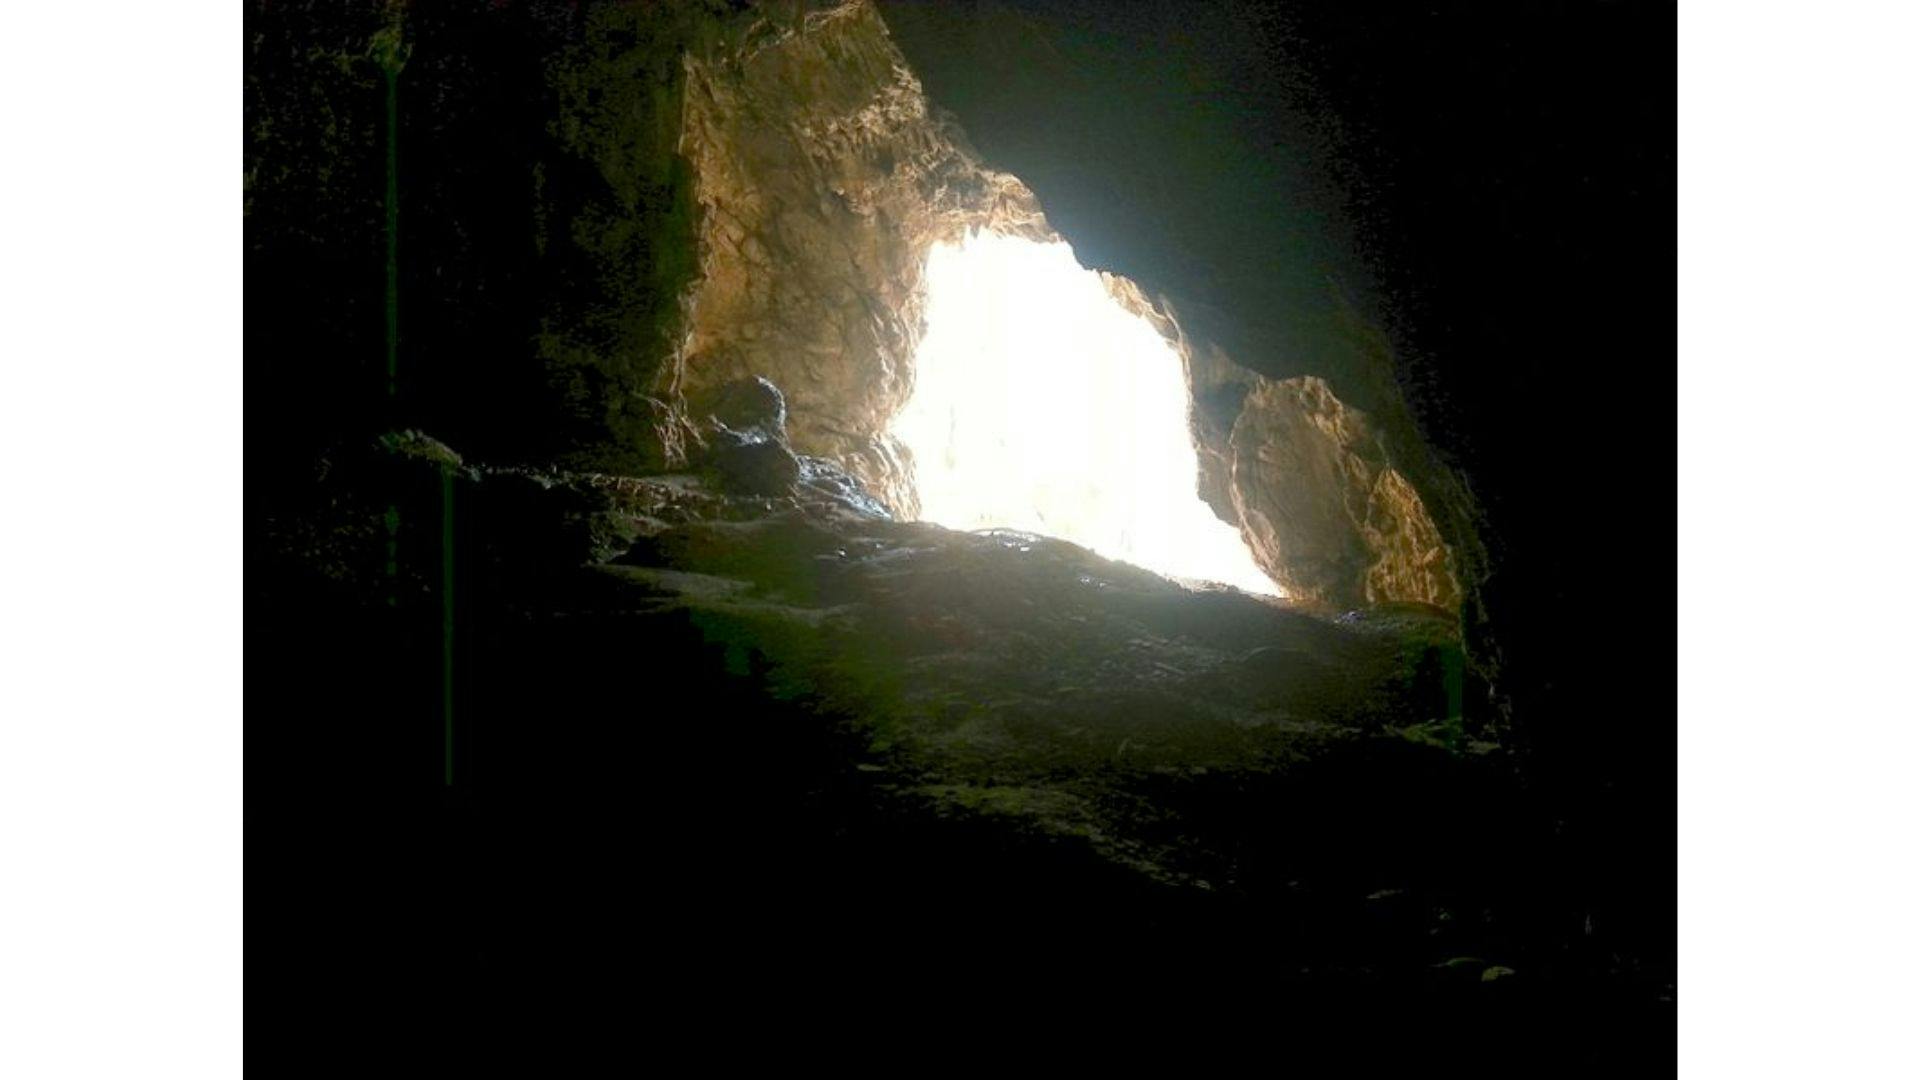 Inside the cave at Kashmir Smast